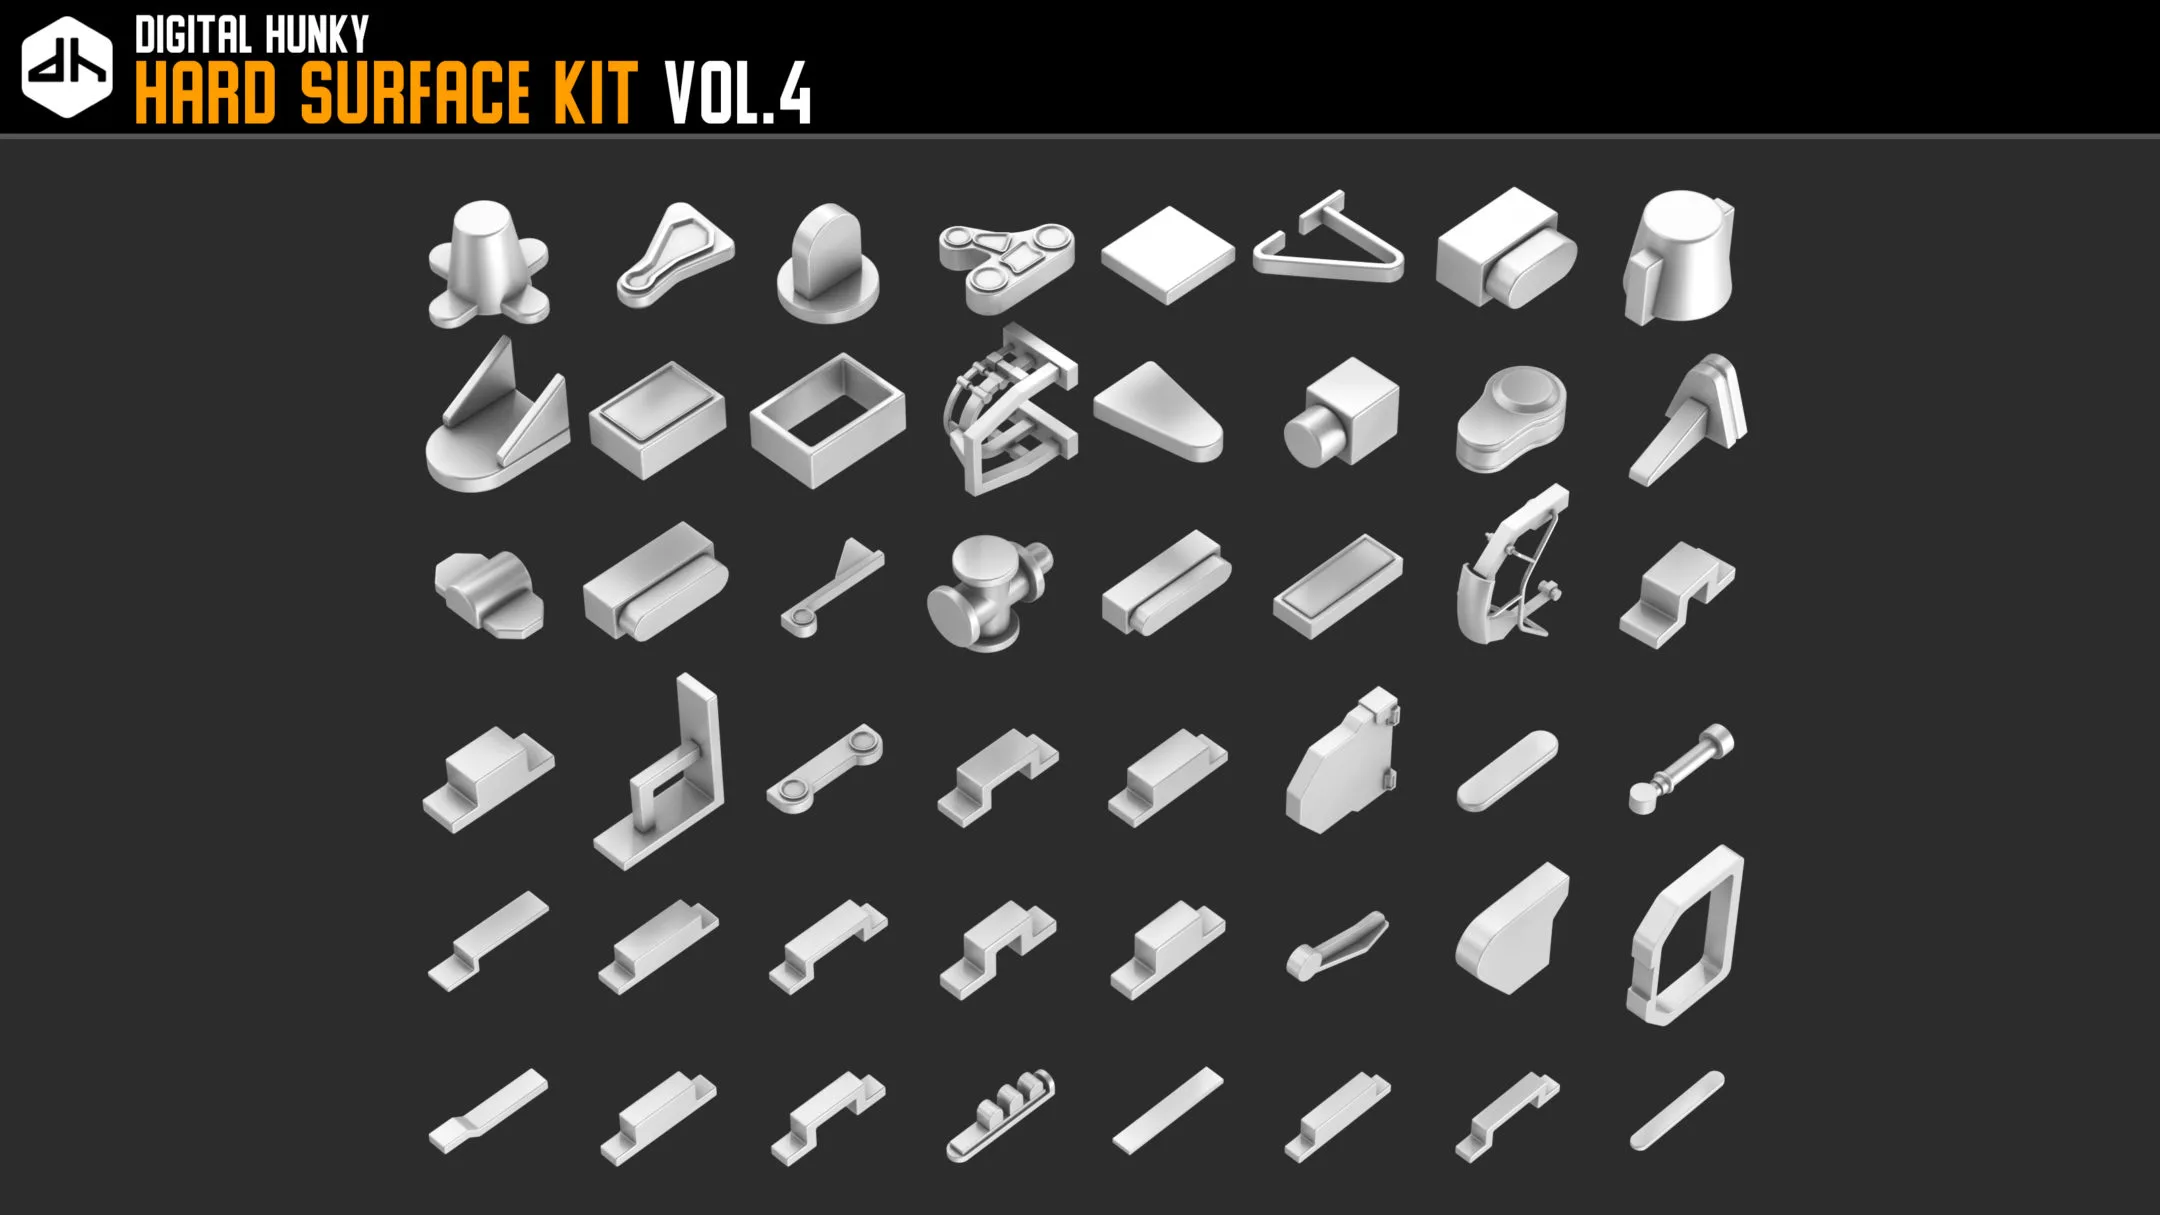 Hard Surface Kit Vol.4